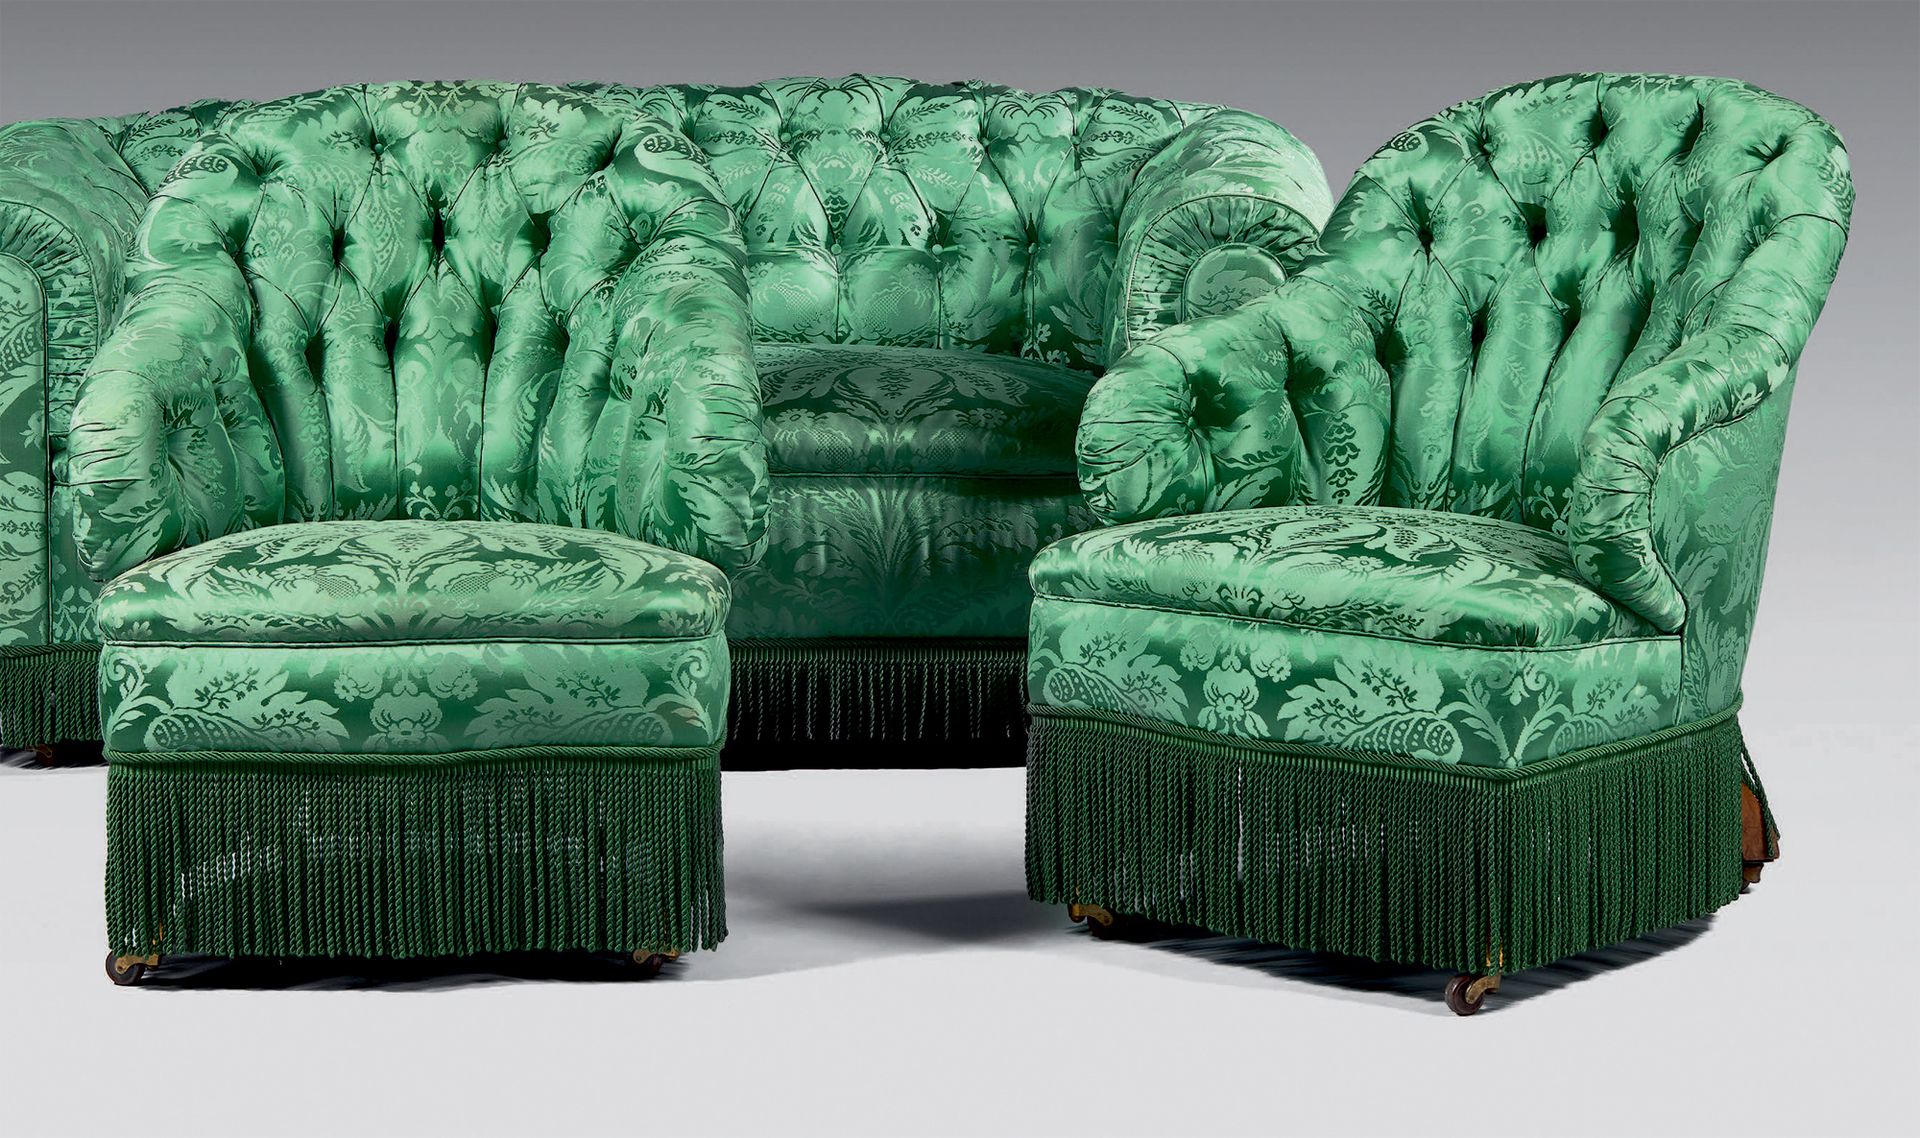 Null 一对扶手椅，绿色Lampas软垫，装饰有流苏。
高：84 - 宽：73 - 深：89厘米